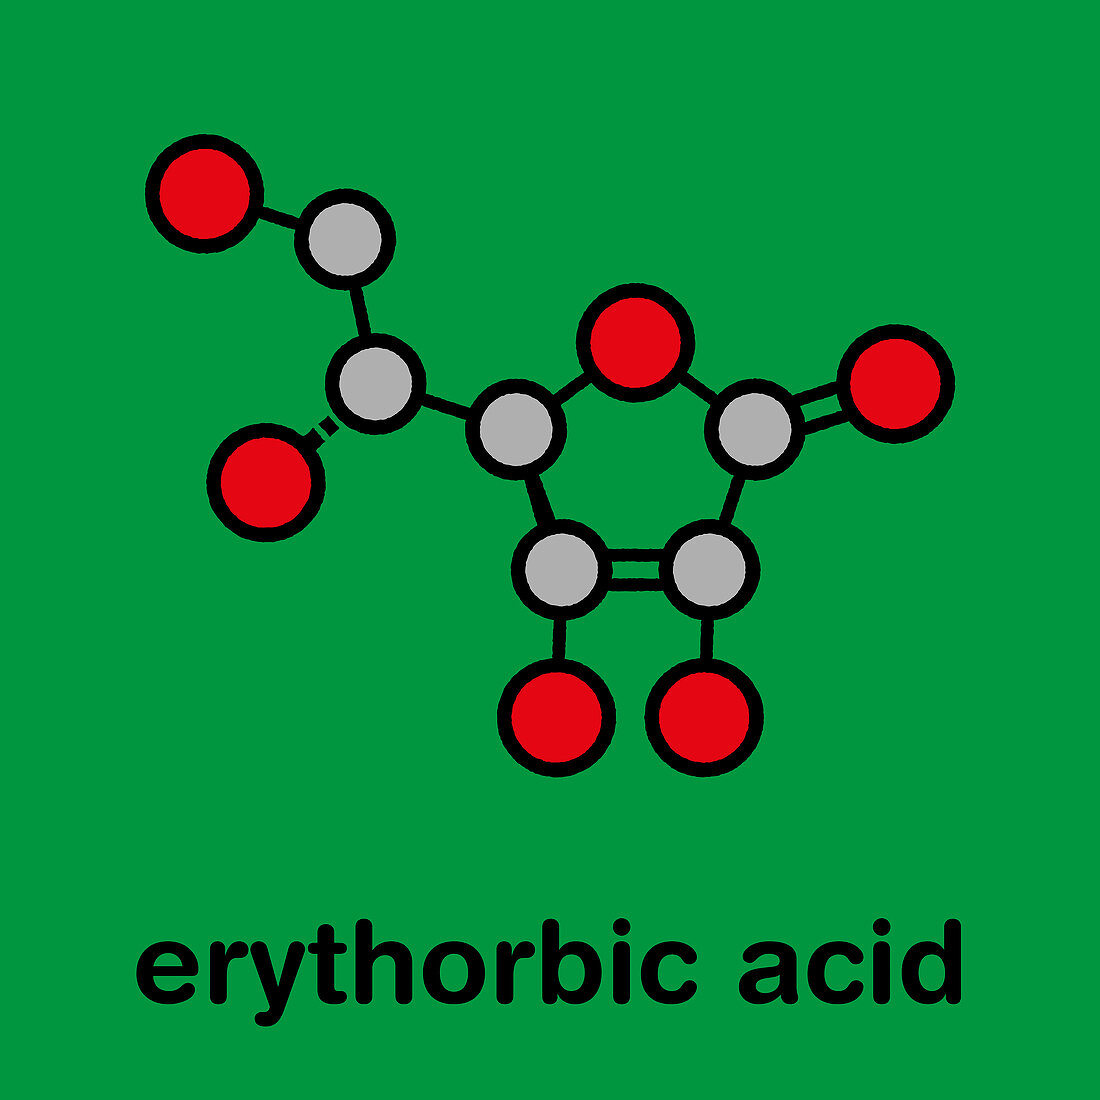 Erythorbic acid food preservative molecule, illustration